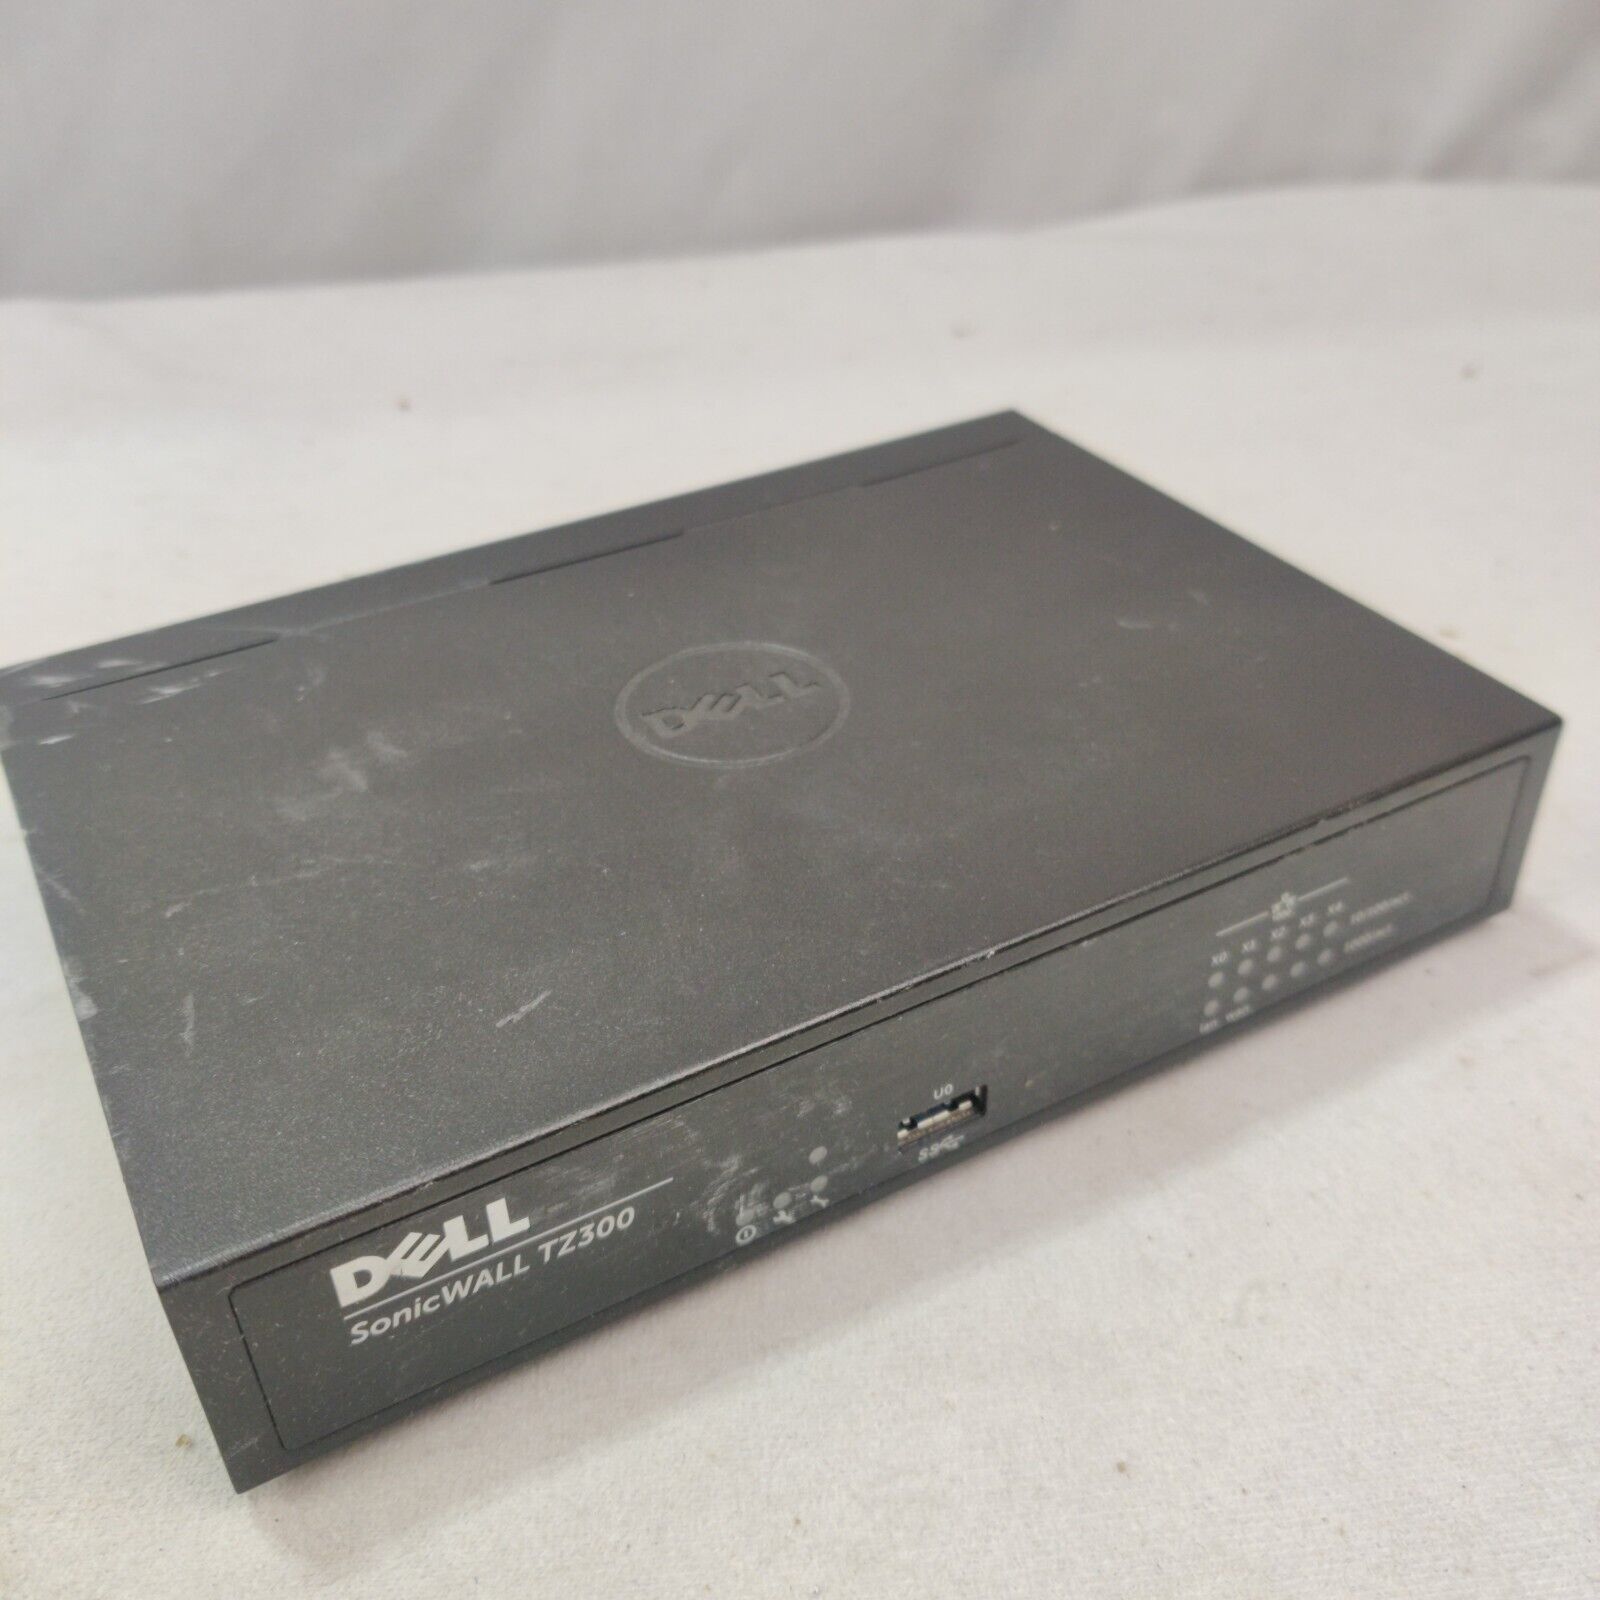 Dell SonicWall TZ300 APL28-0B5 Wireless Firewall 101-500475-50R NO AC ADAPTER